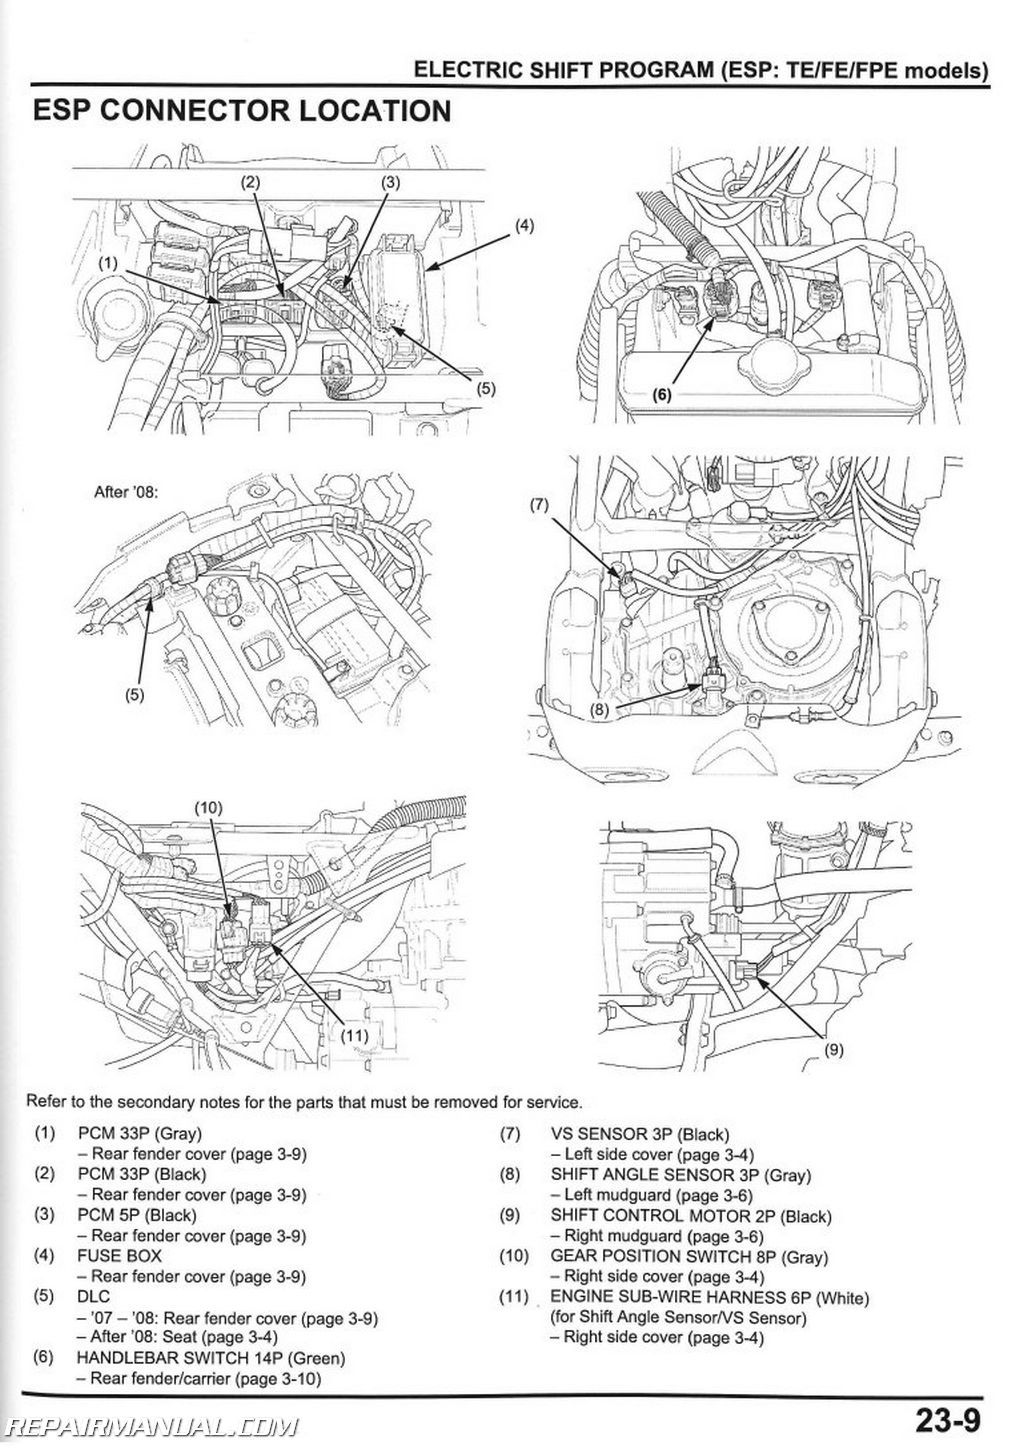 2008 Honda rancher wiring diagram #2